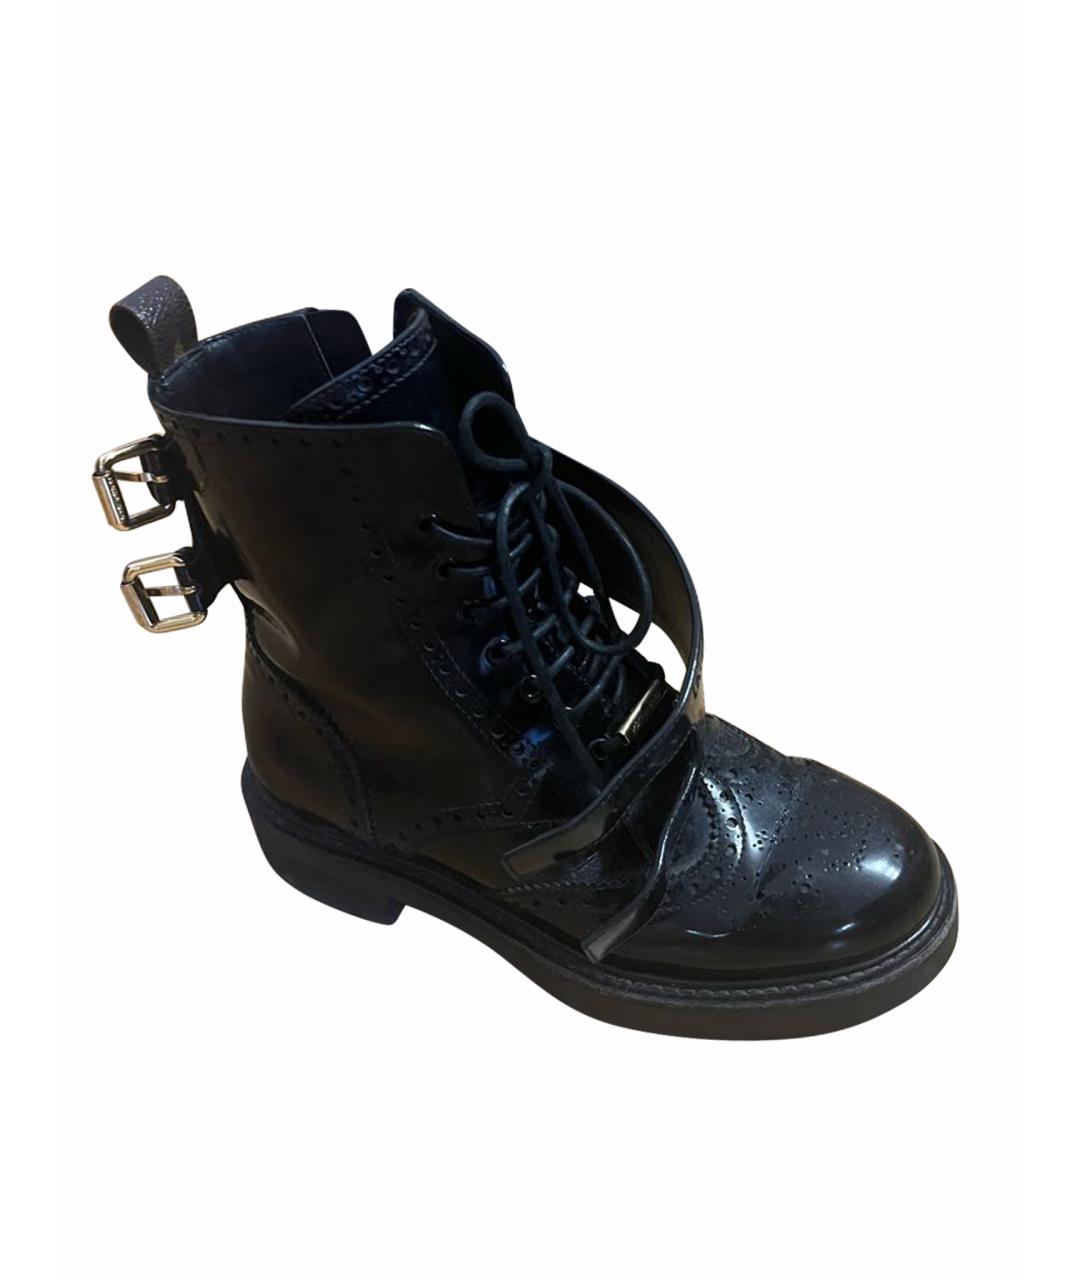 LOUIS VUITTON PRE-OWNED Черные кожаные ботинки, фото 1